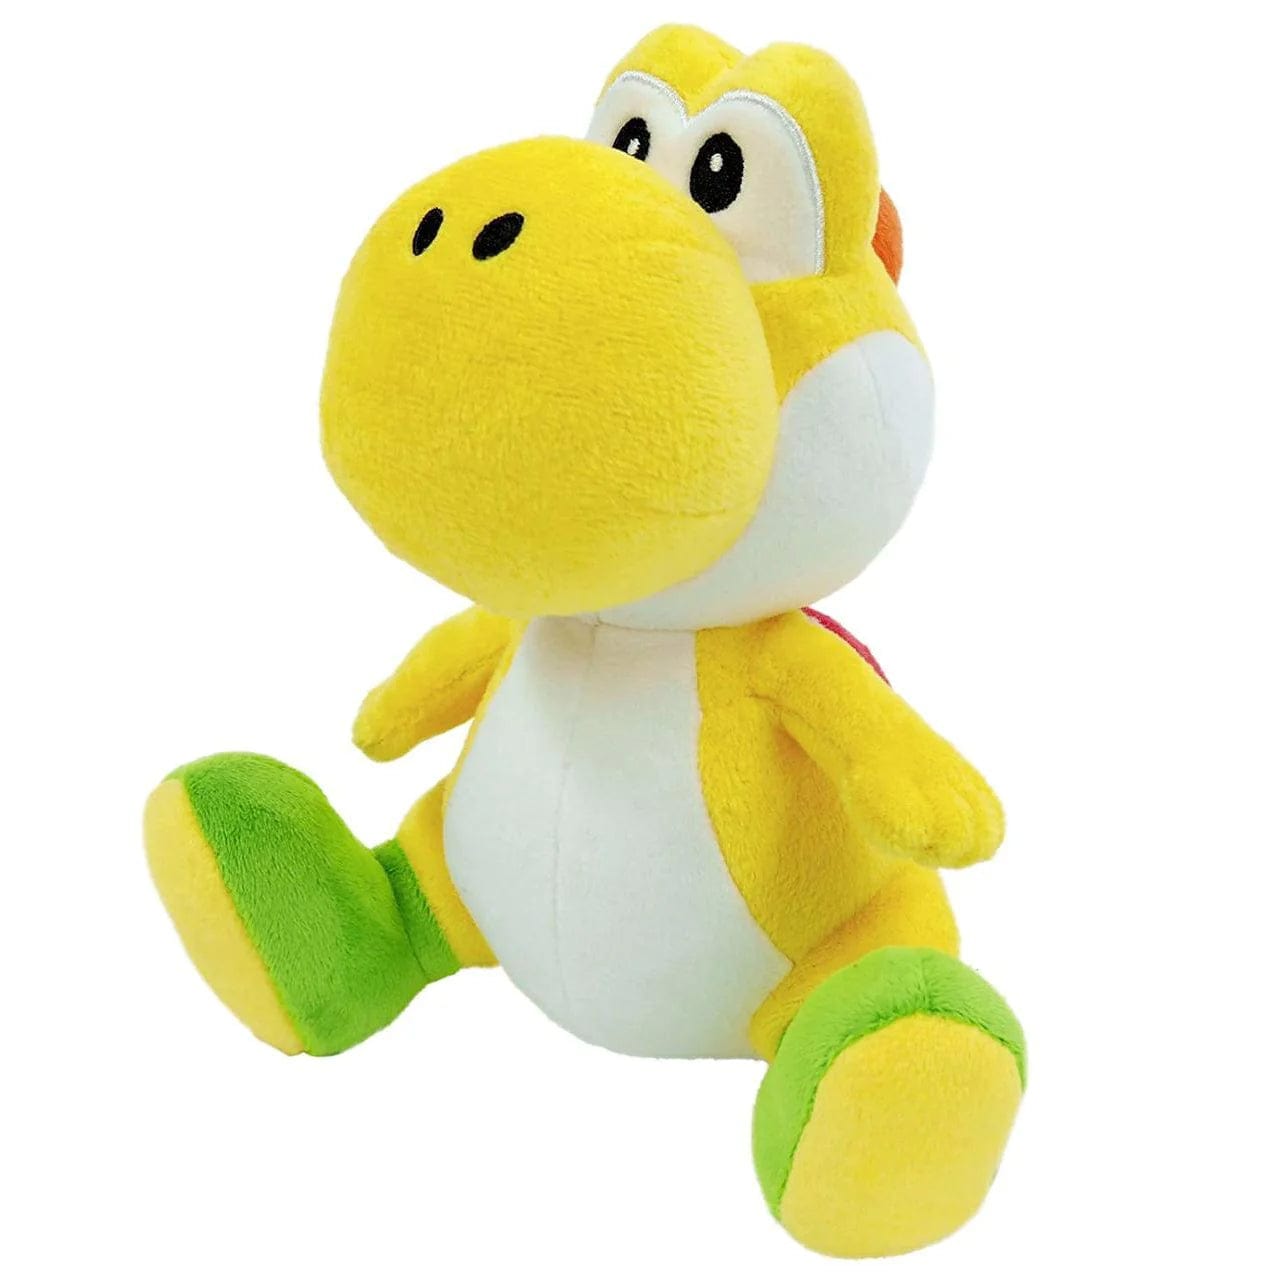 Little Buddy Super Mario All Star Yoshi - Yellow Yoshi Plush 7"